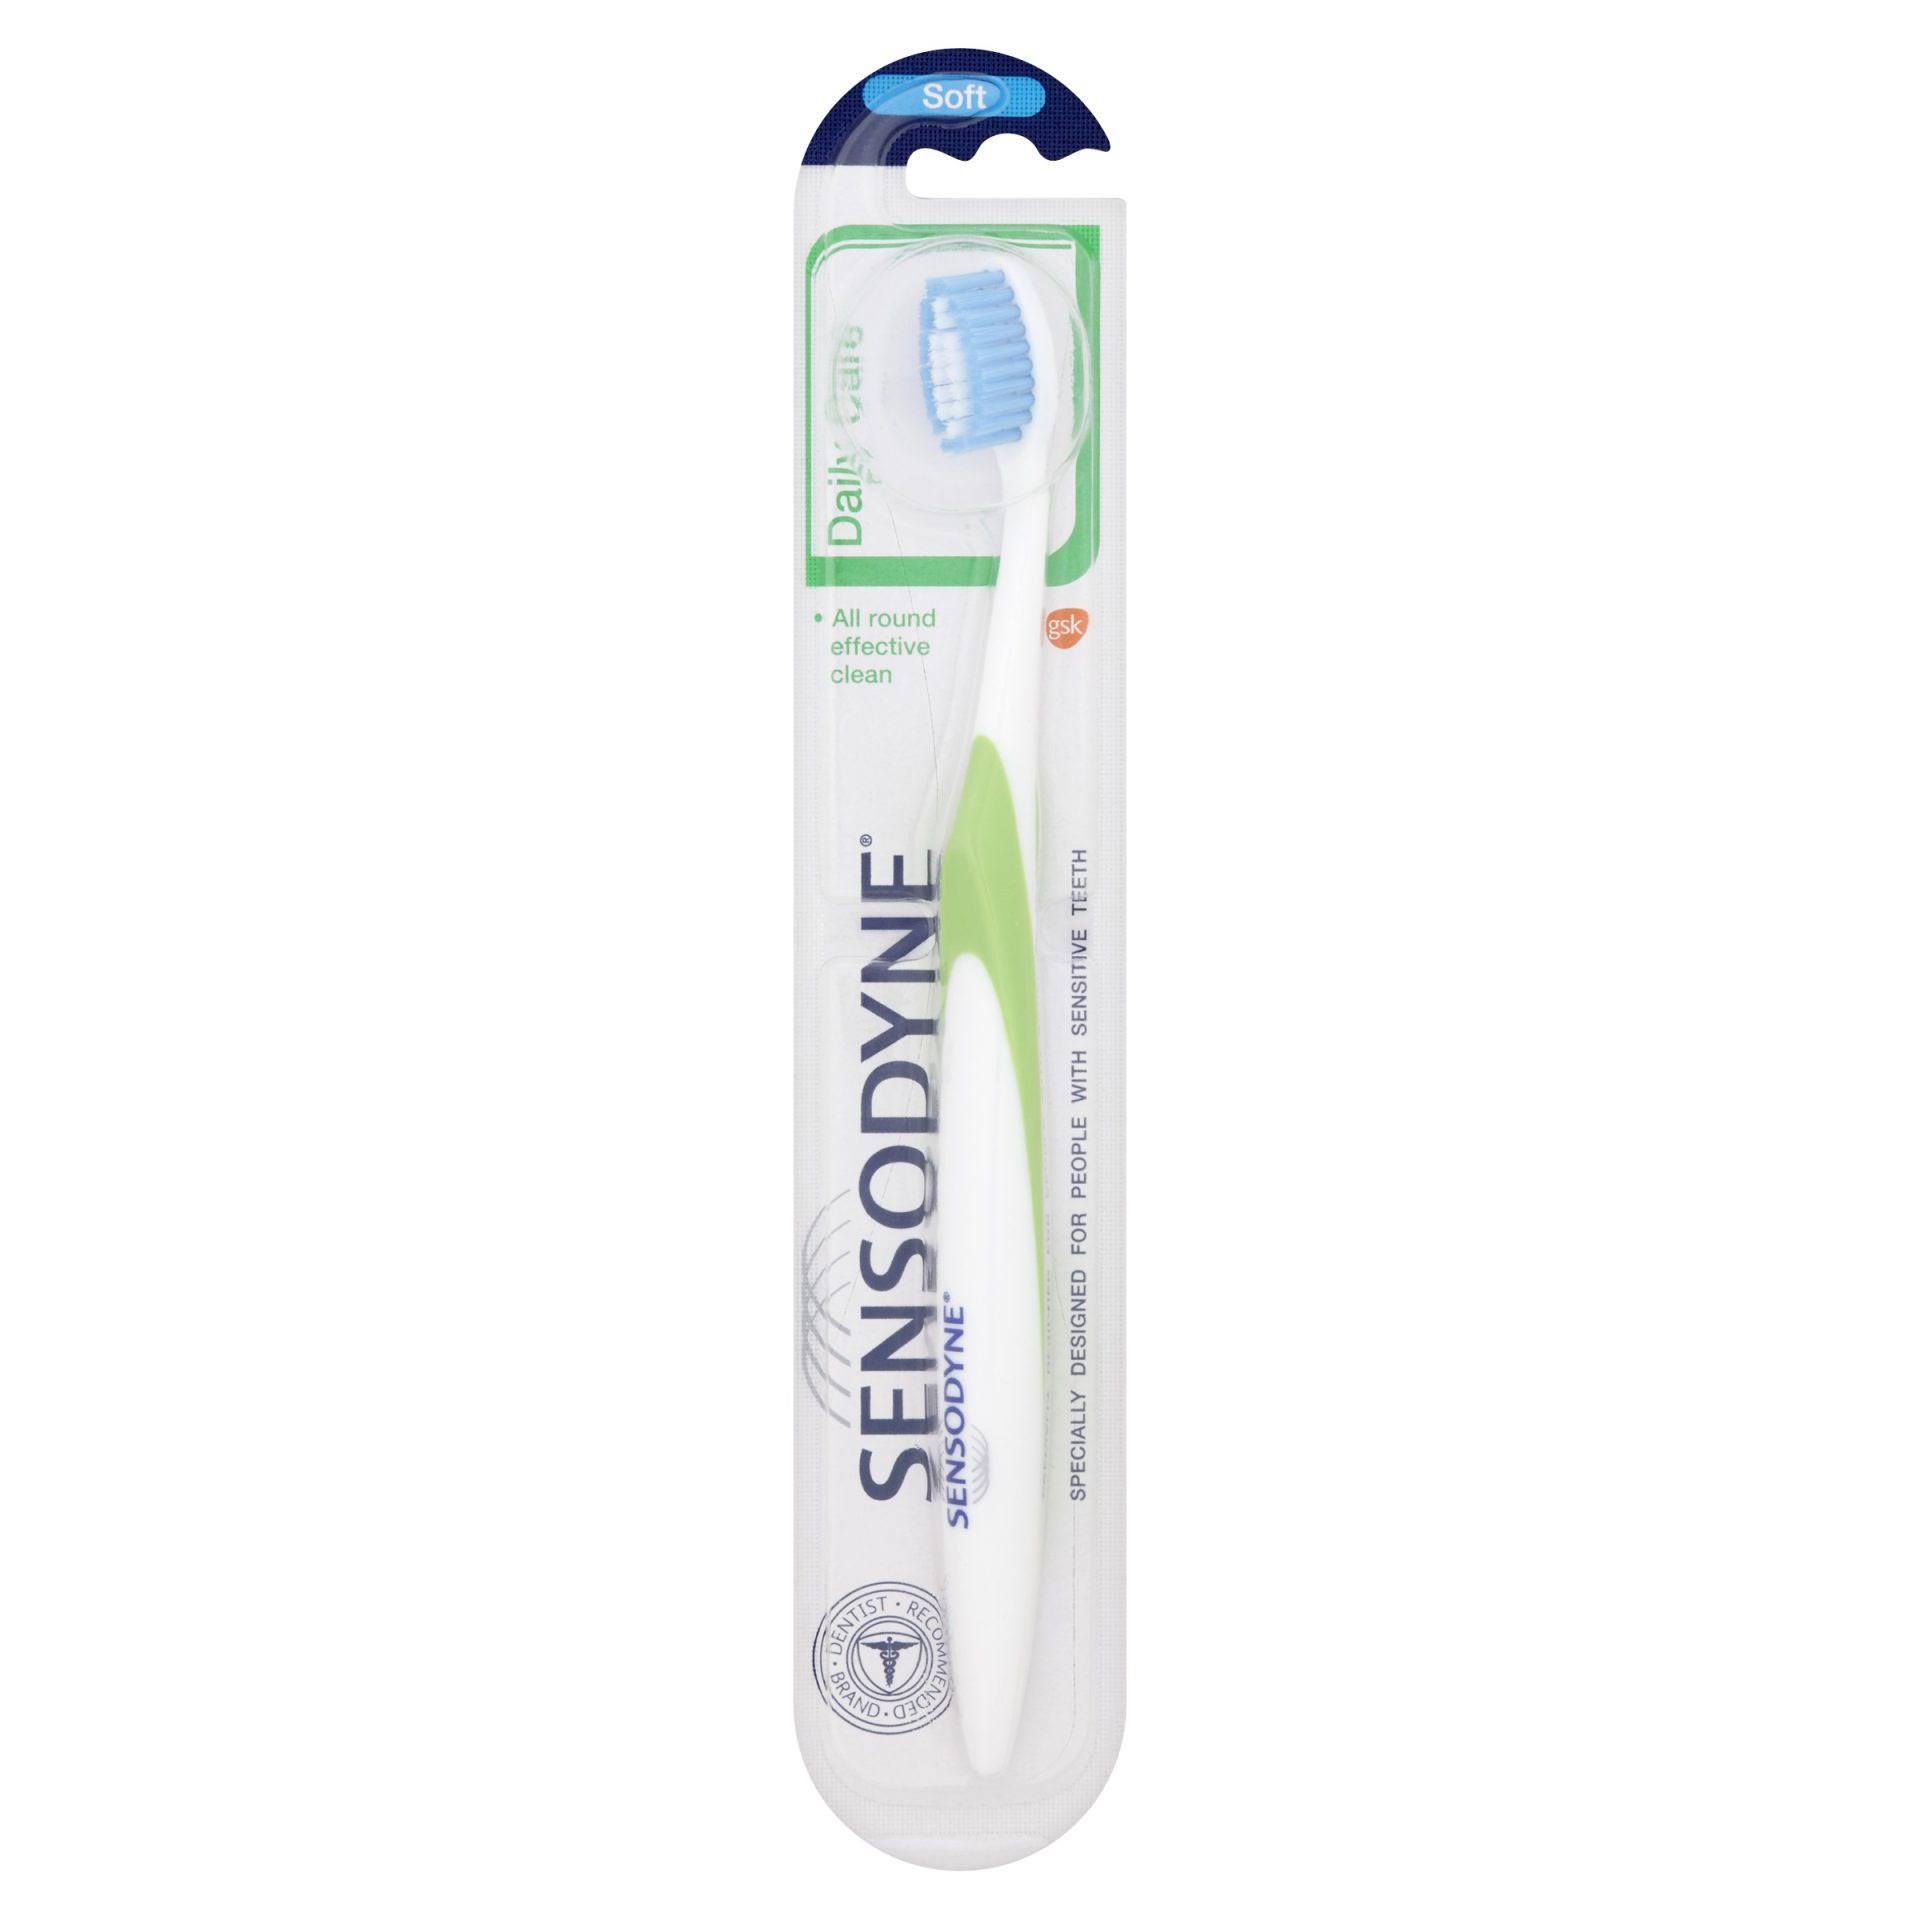 Sensodyne Daily Care Toothbrush - Soft Bristle